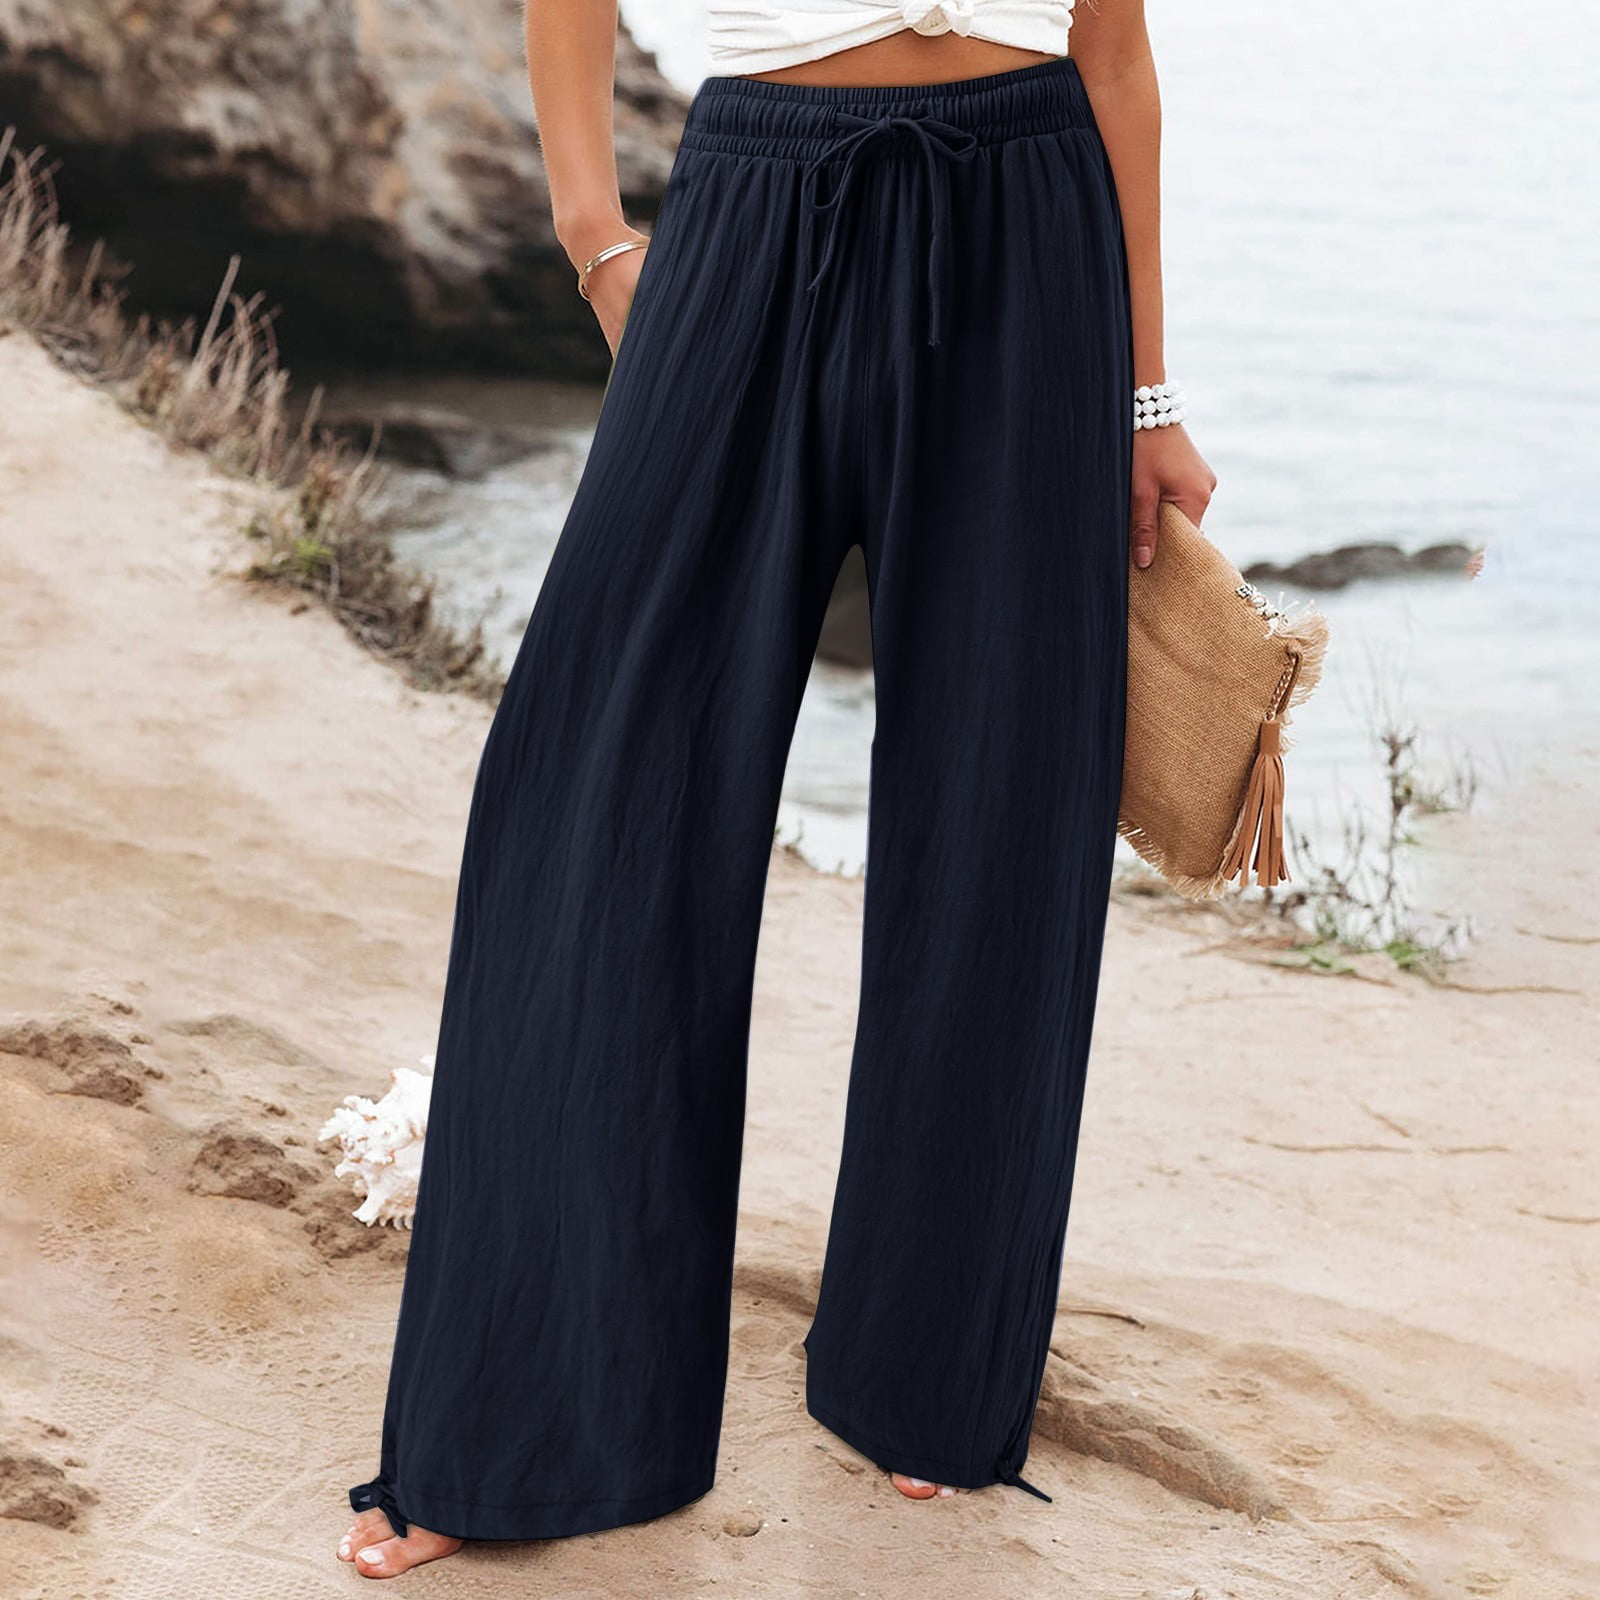 MIVAMIYA Palazzo Pants for Women Comfy Linen Drawstring Wide Leg Lounge  Pants Plus Size Yoga Pajama Trousers S-3XL